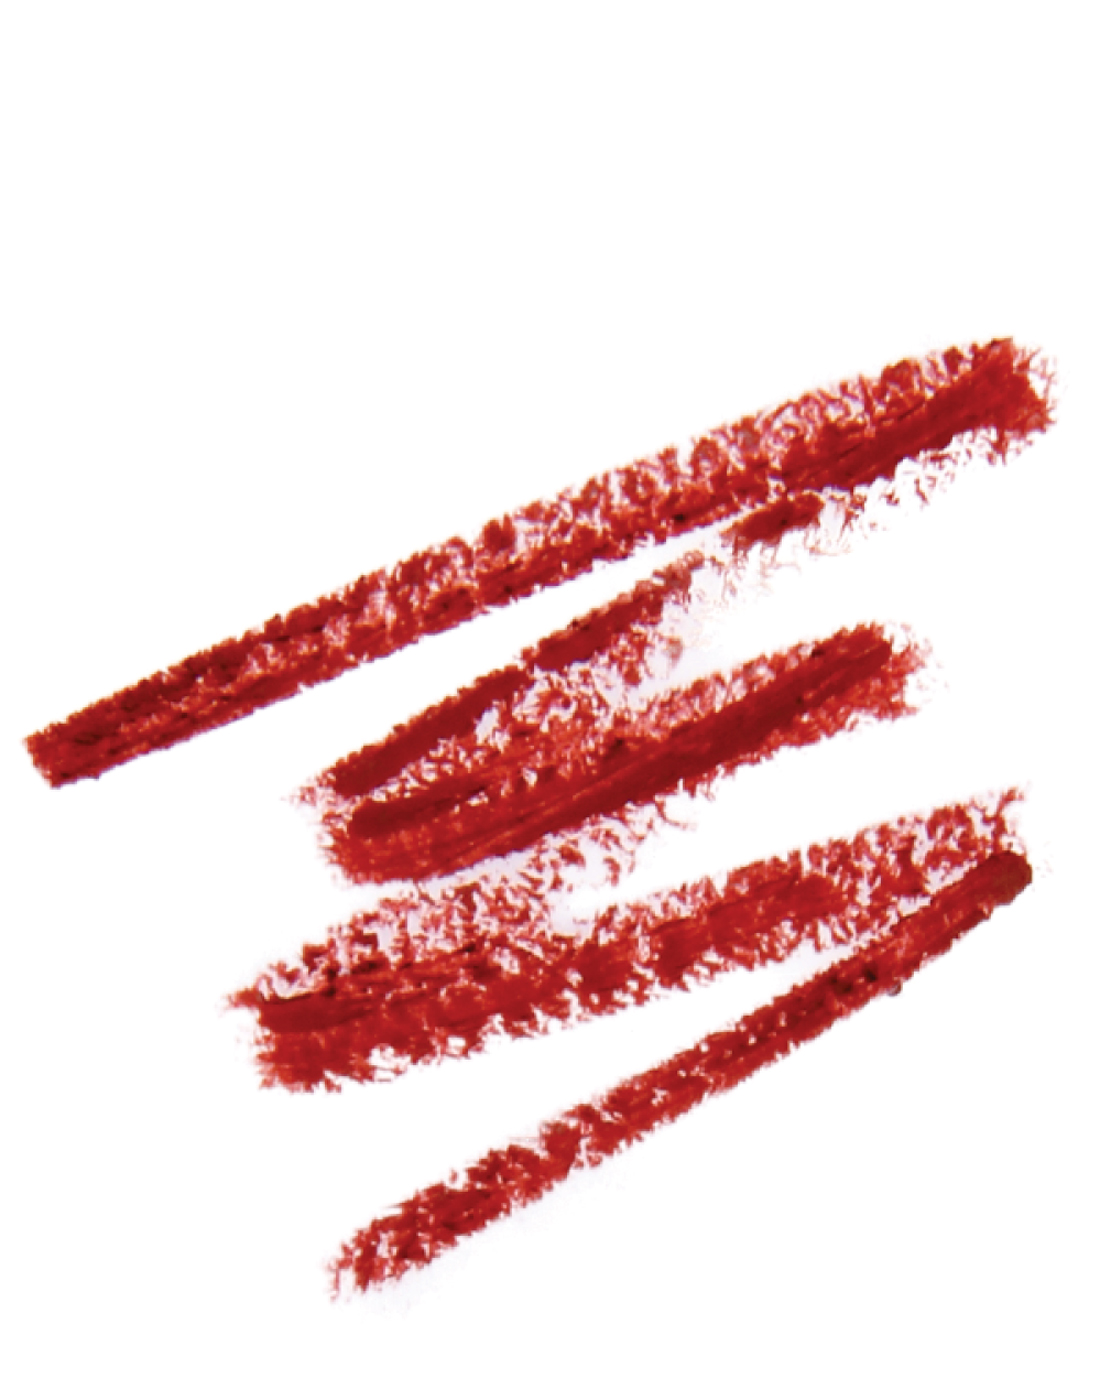 Sedell Paris Mini Lipstick & Lip Liner Pencil Sweet Cherry - 1.4g